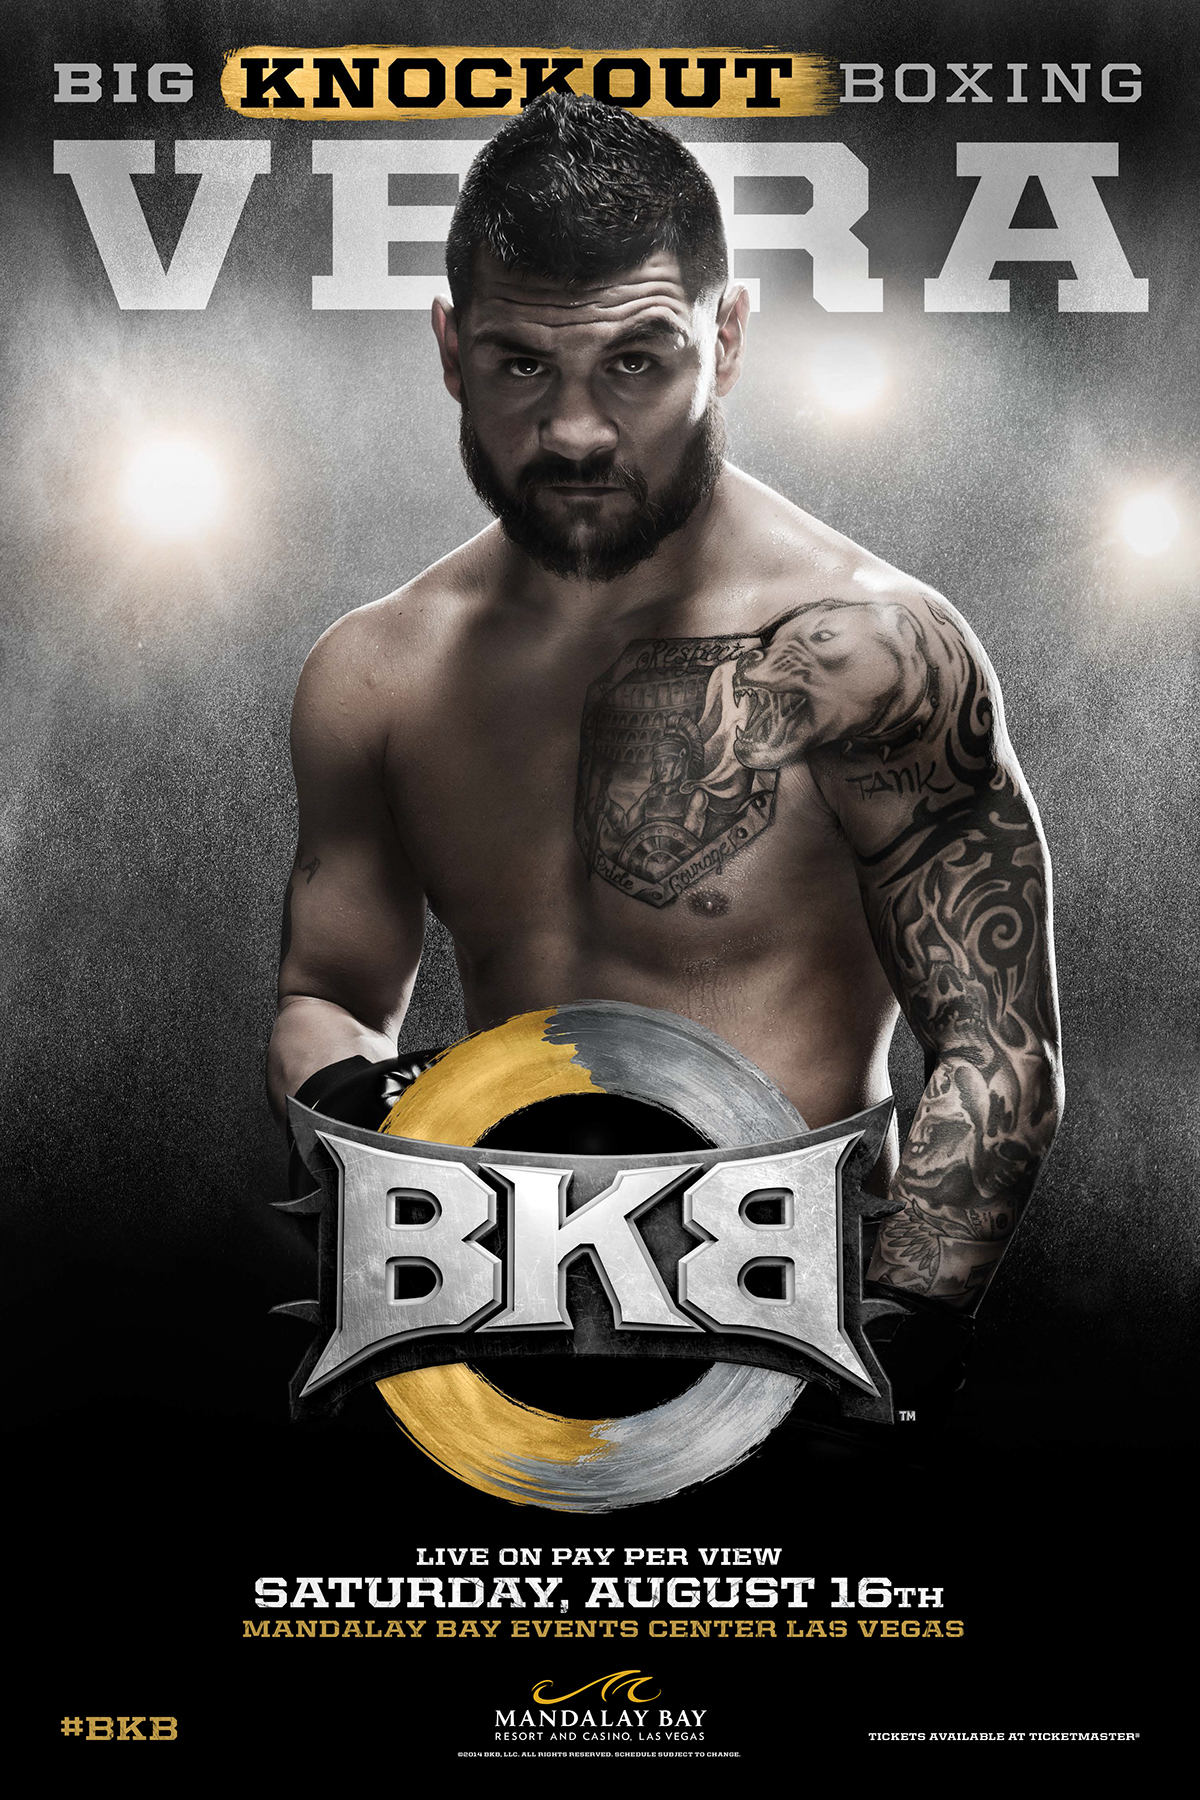 bkb Boxing fight Las Vegas Event casino vera rosado Gabriel Bryan knockout big Addressable targeted ad